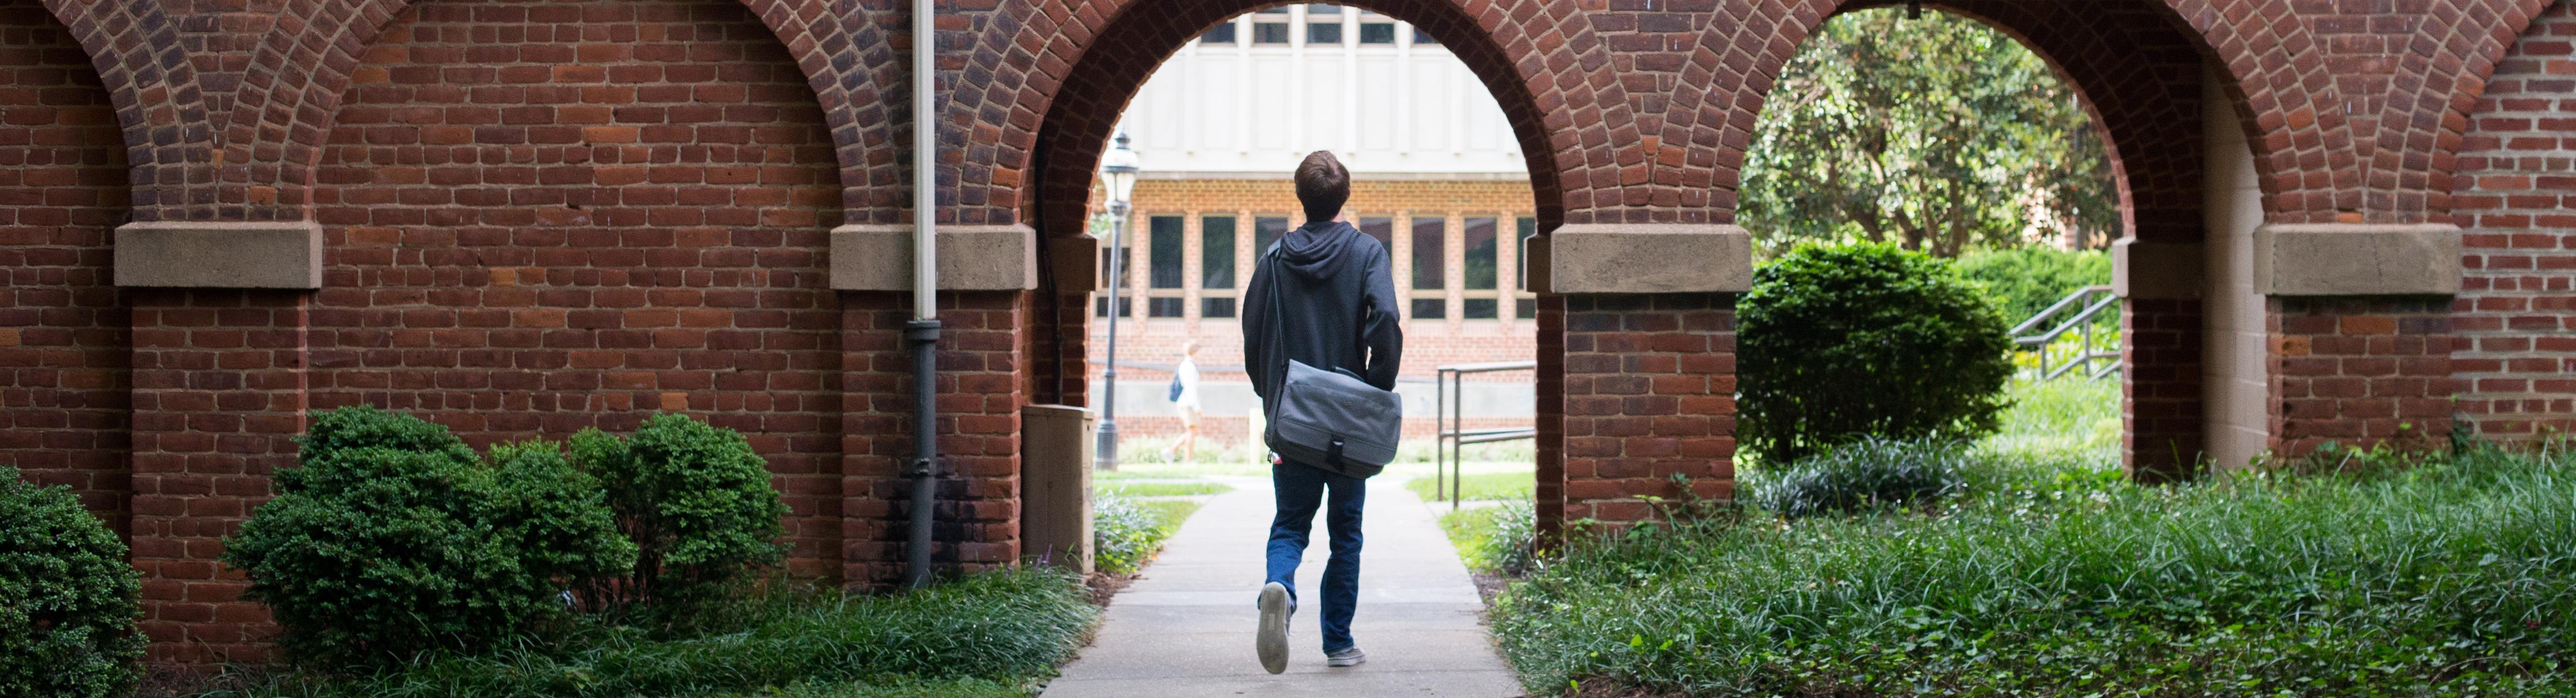 Photo of student walking through campus.